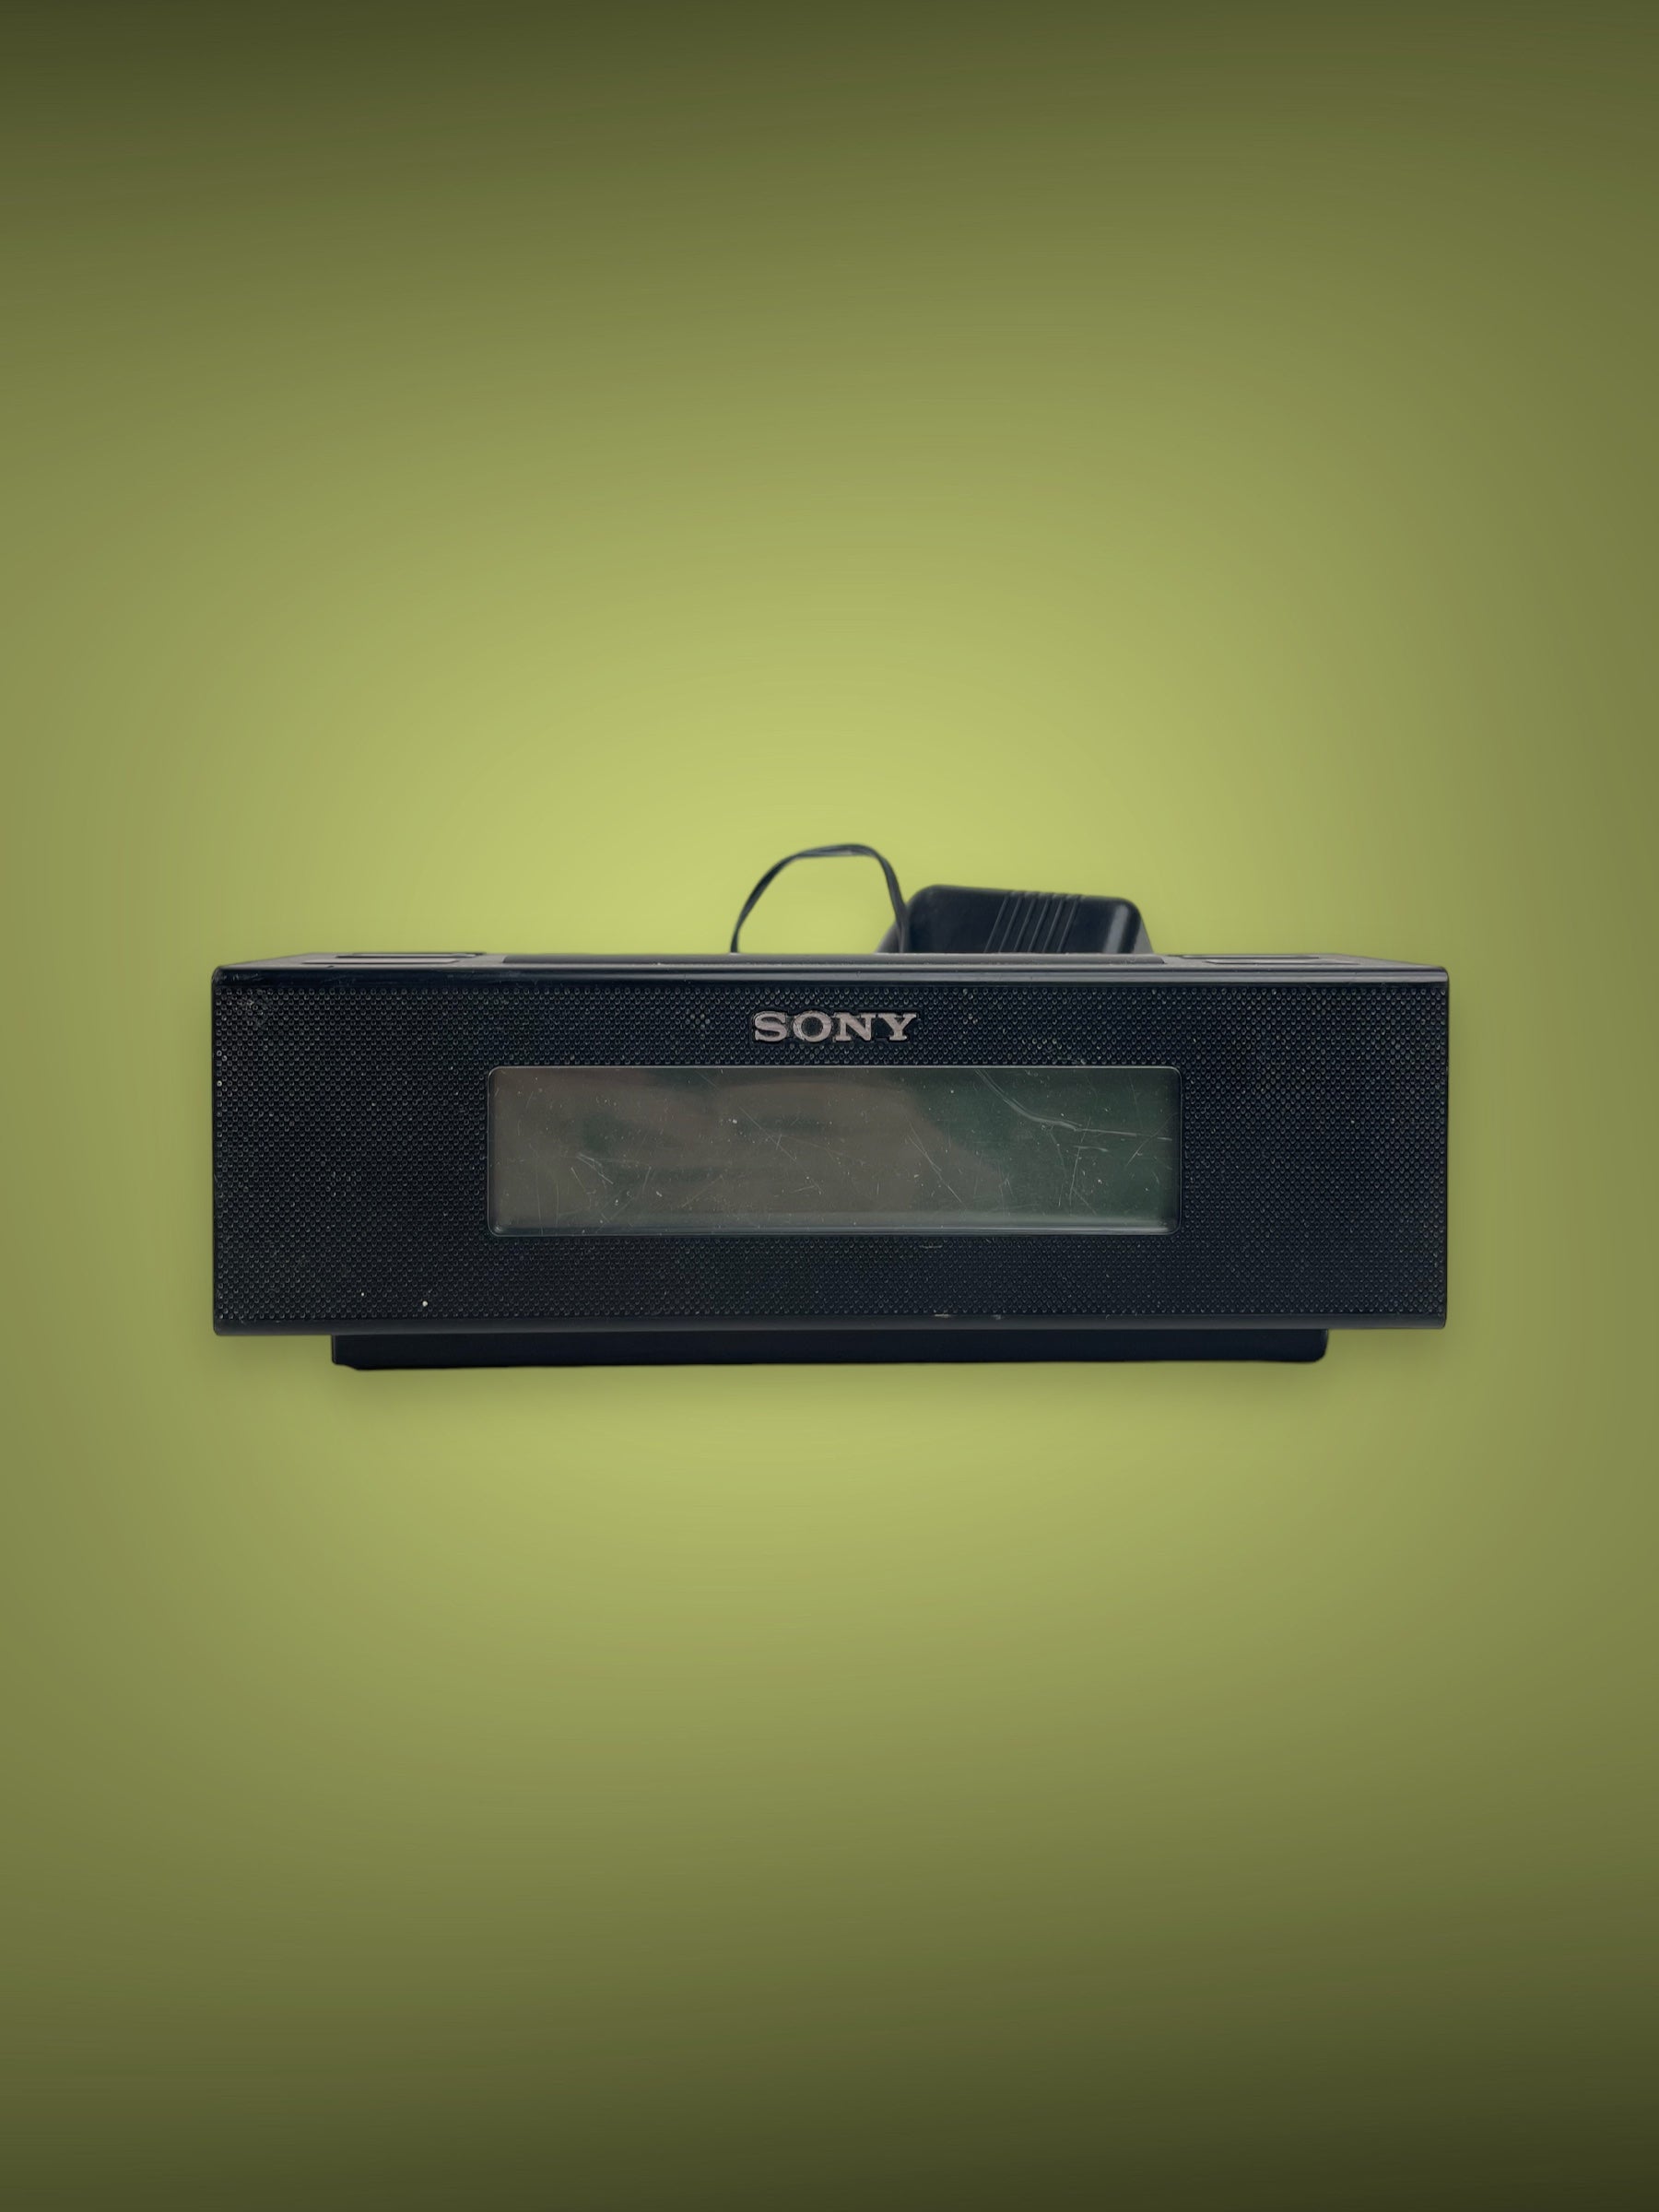 Sony ICF-C707 Radio-réveil Radio numérique AM/FM